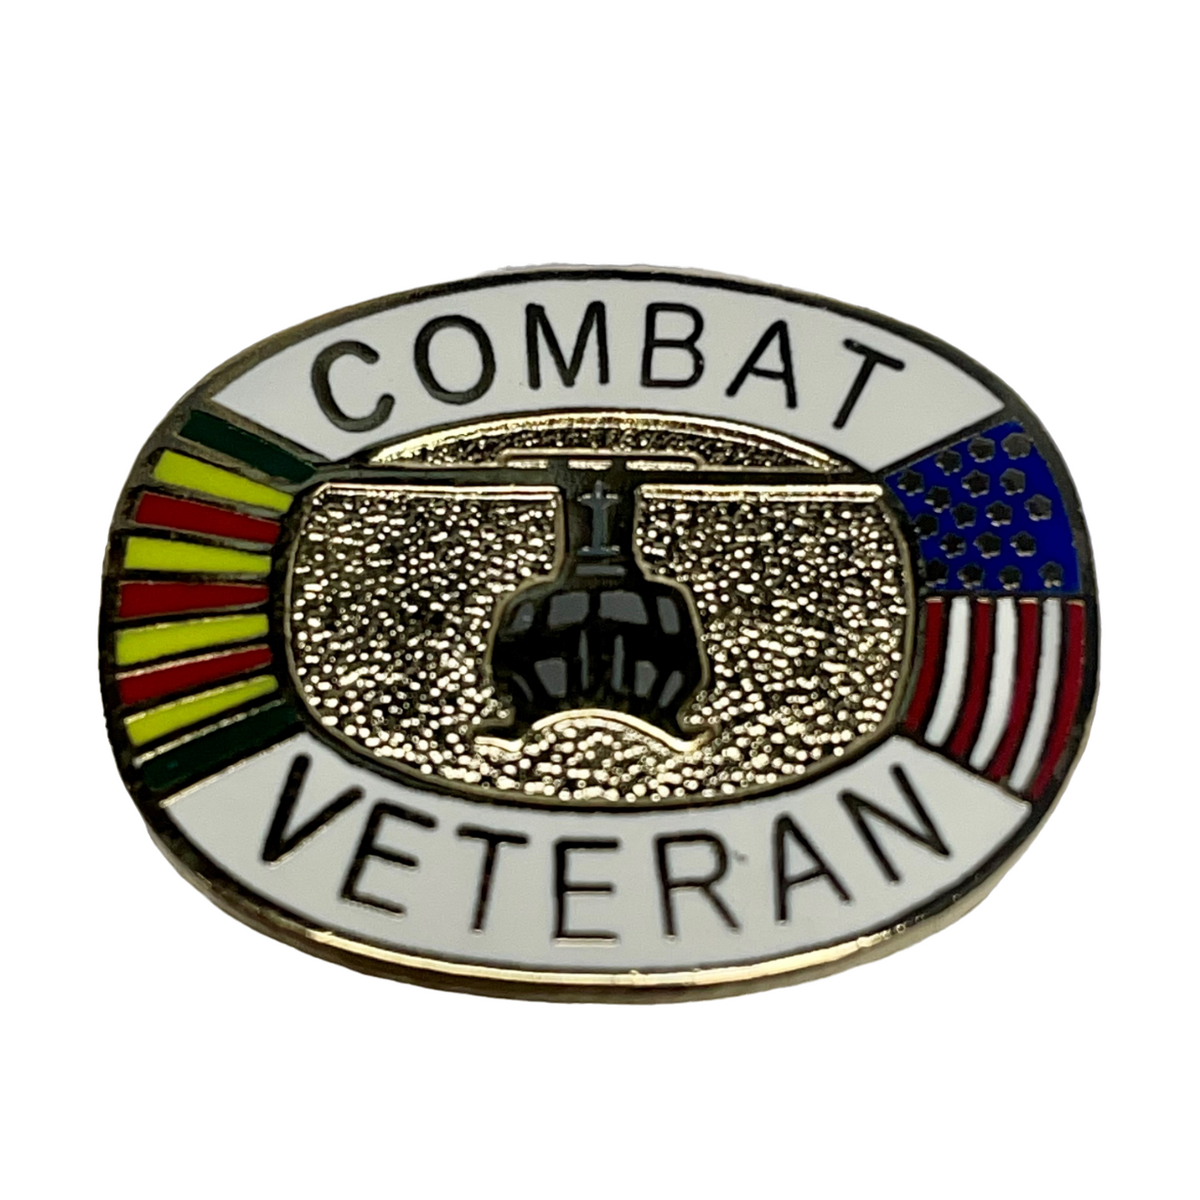 Combat Veteran Pin  - Size 1 inch - CLEARANCE!